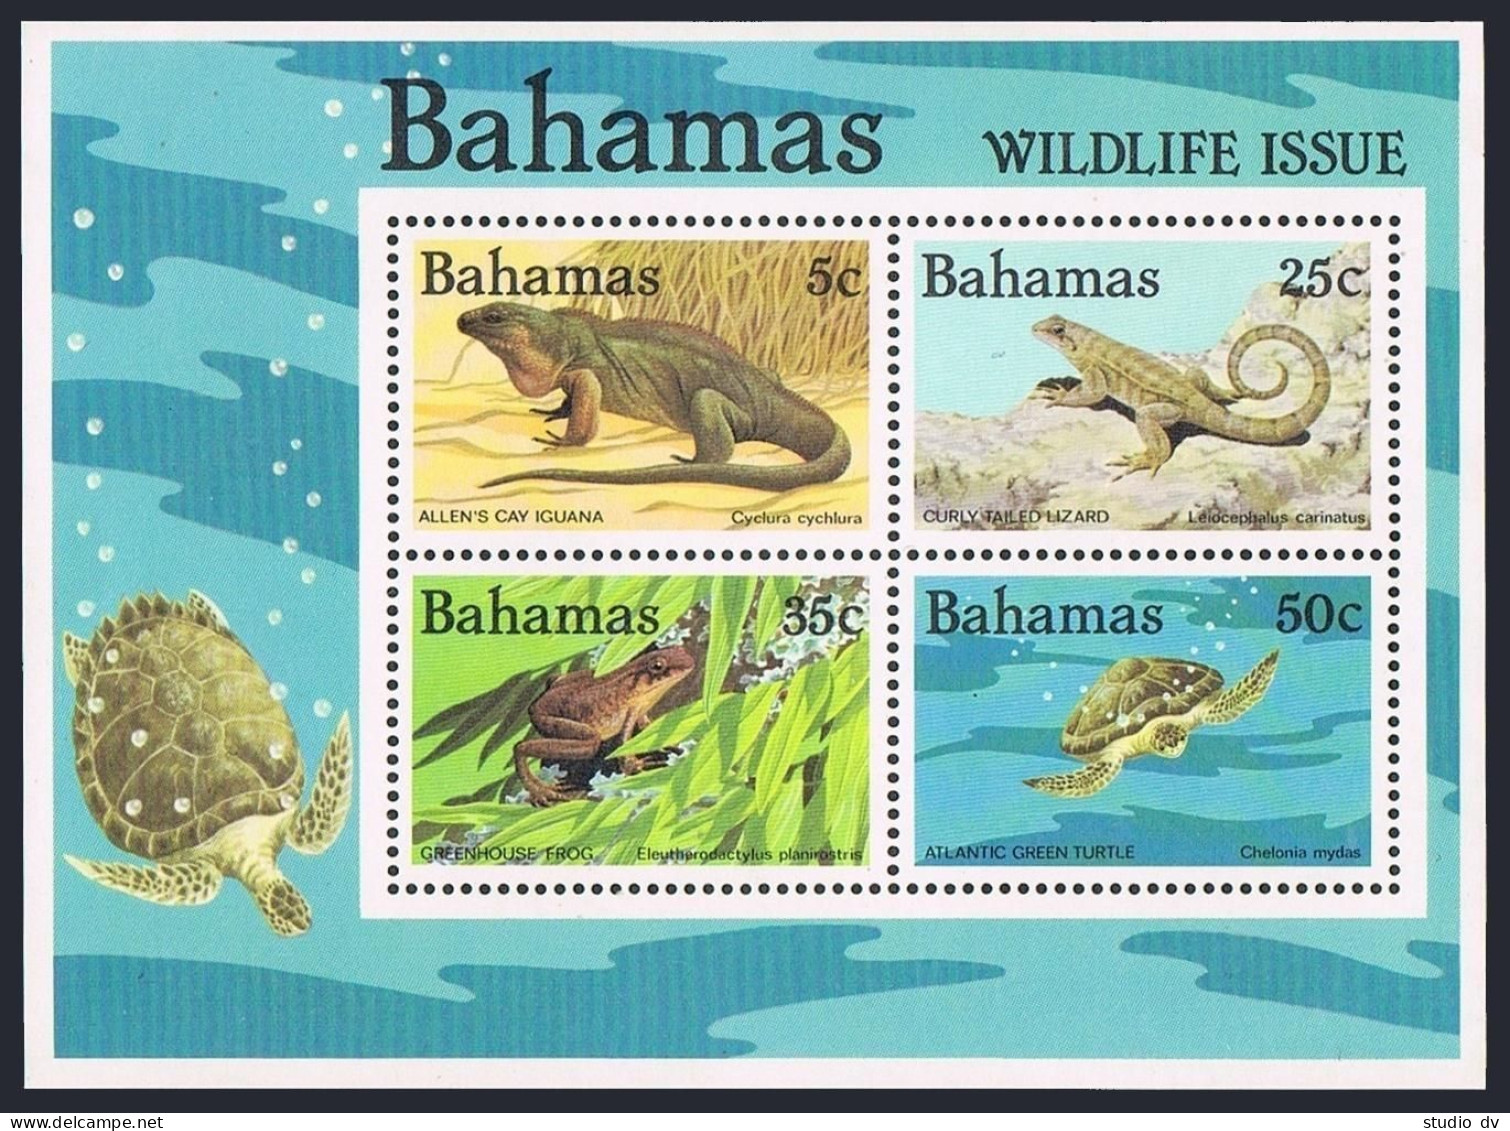 Bahamas 567a Sheet, MNH. Mi Bl.43. Reptiles 1984. Iguana, Lizard, Frog, Turtle. - Bahamas (1973-...)